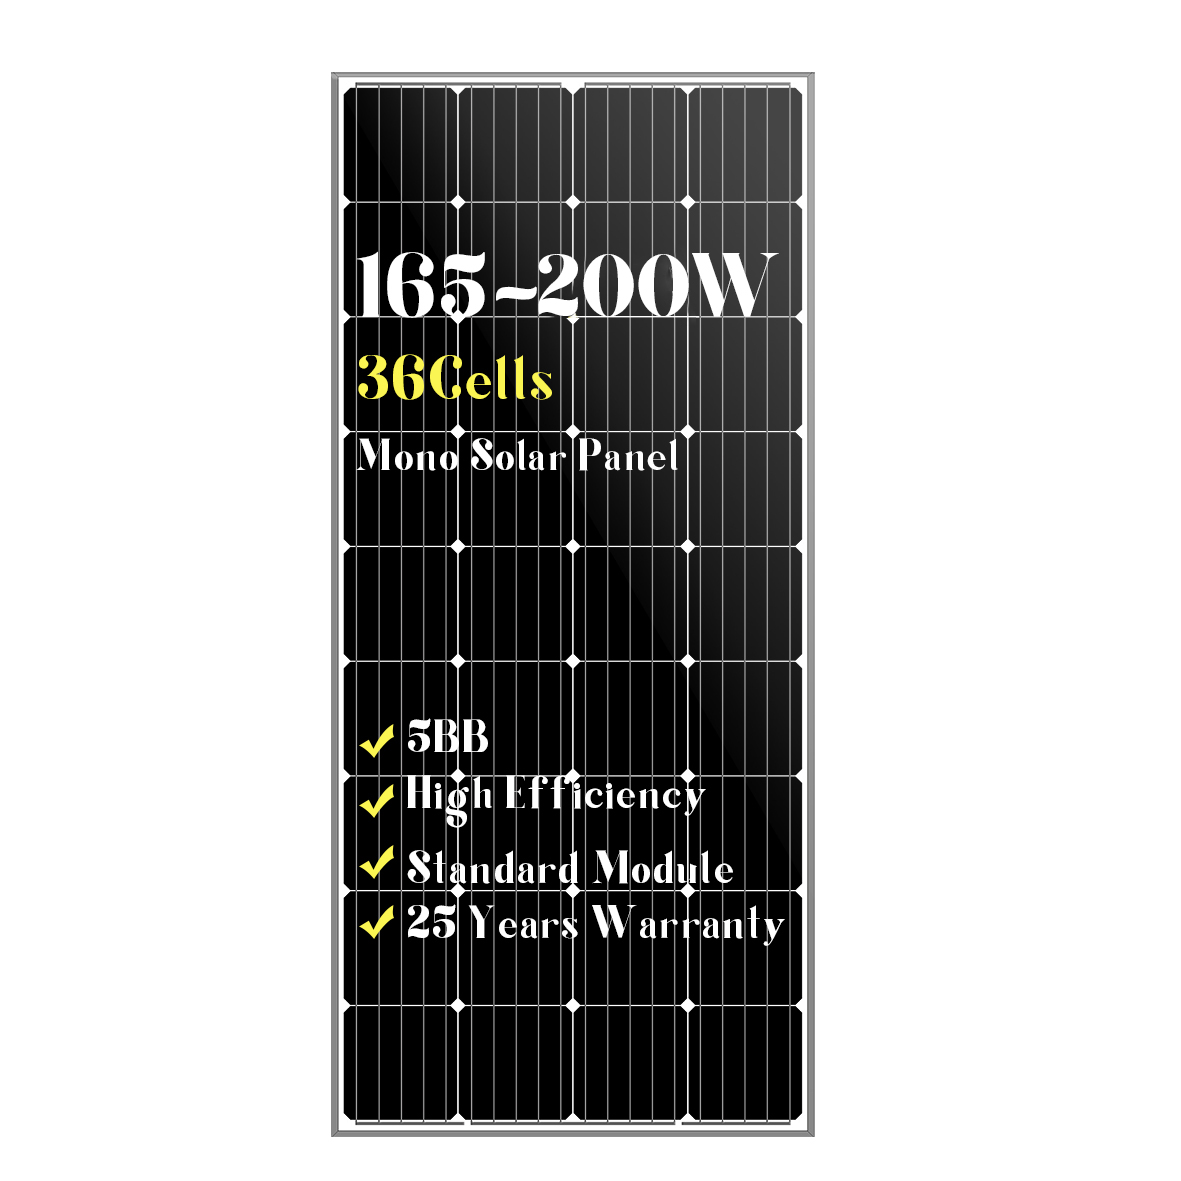 36 cells mono solar panels 165w175w190w 200W Featured Image